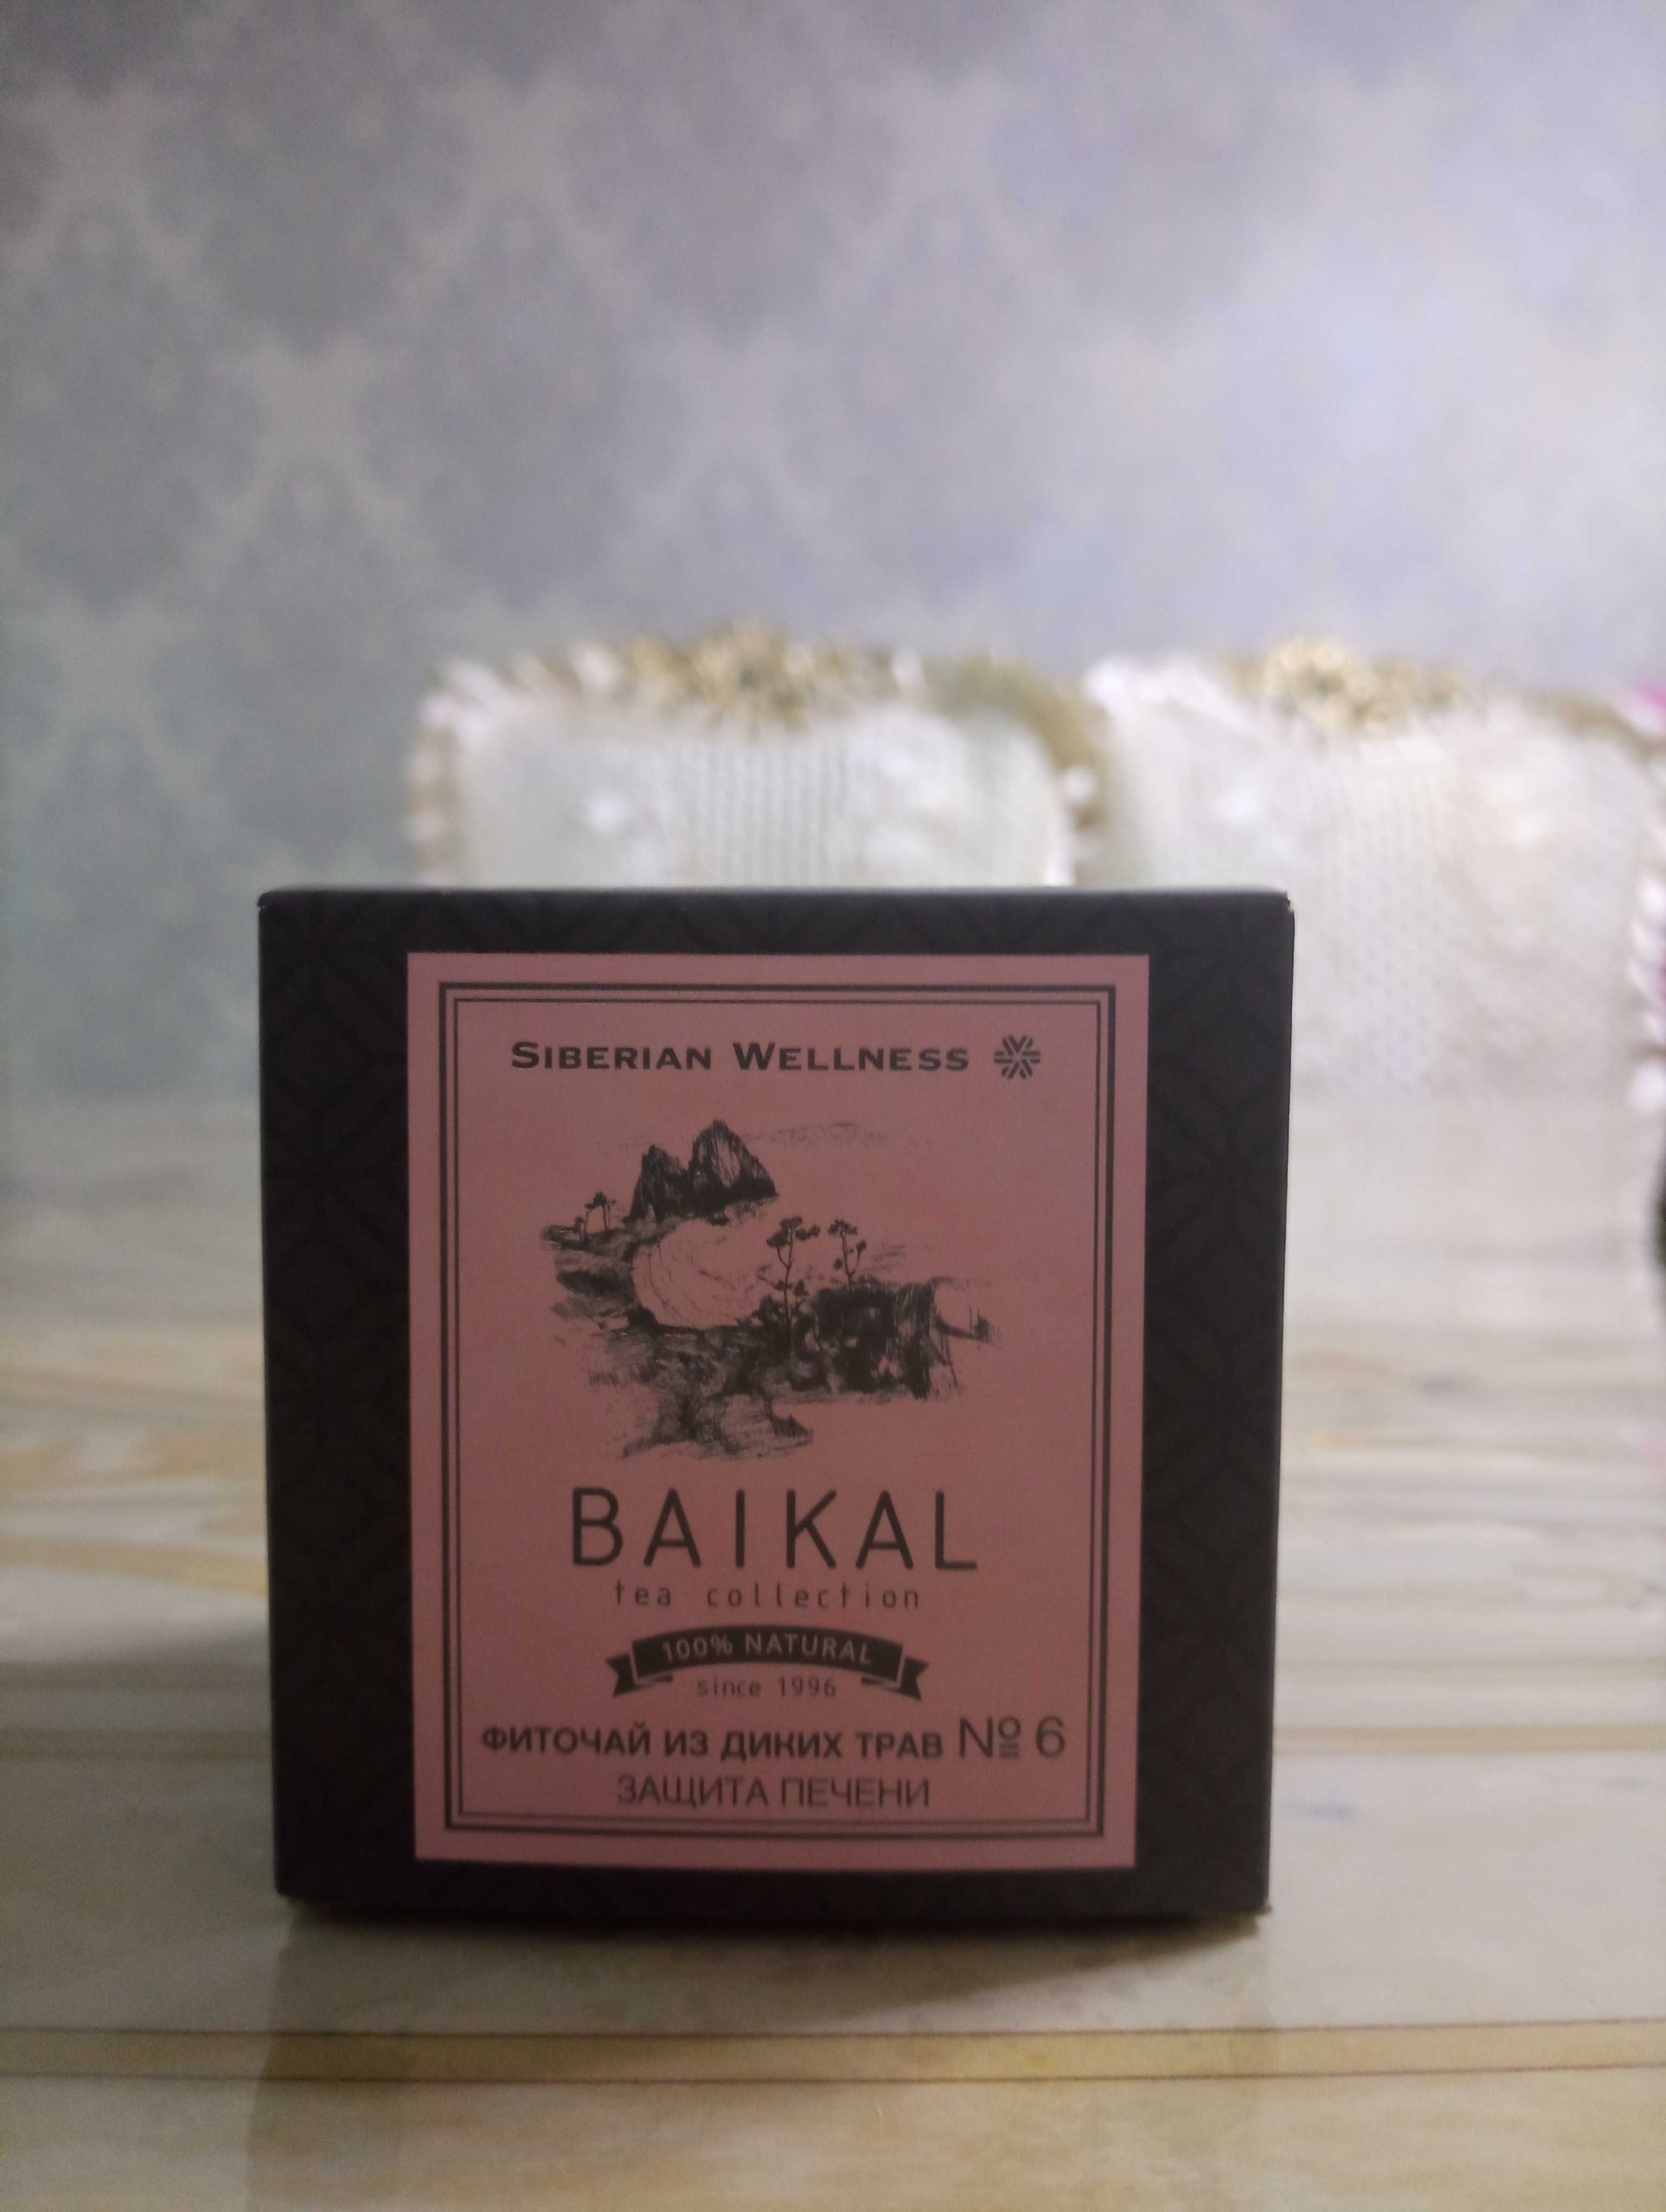 BAIKAL tea collection